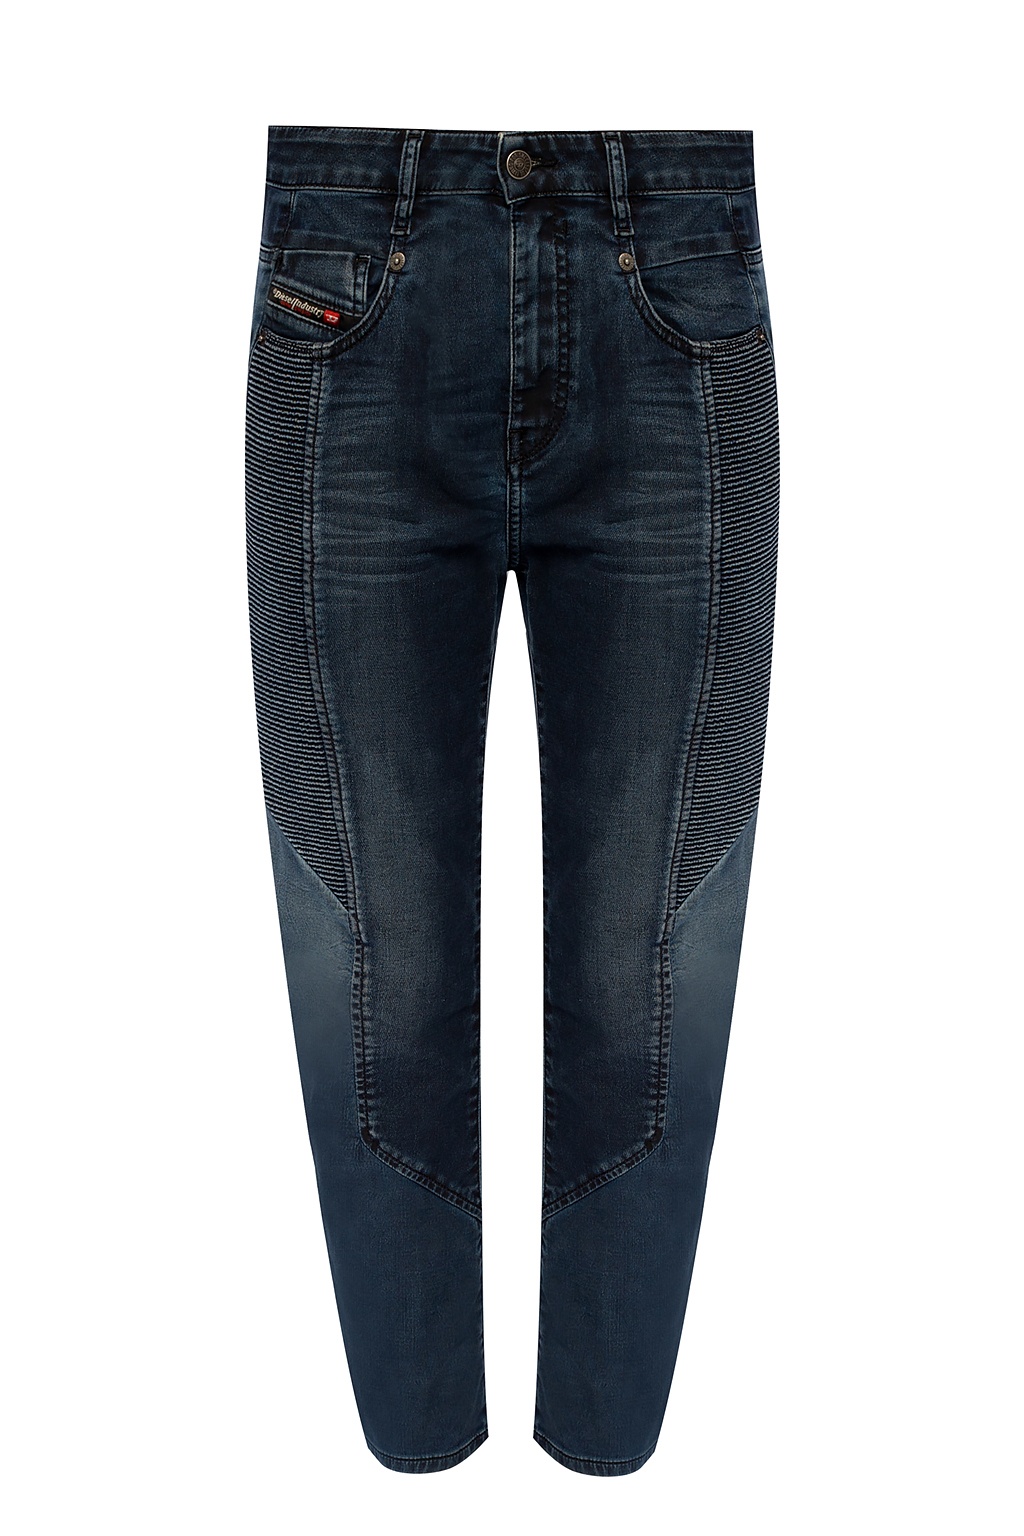 Diesel 'D-Fayza Jogg' jeans | Women's Clothing | Vitkac